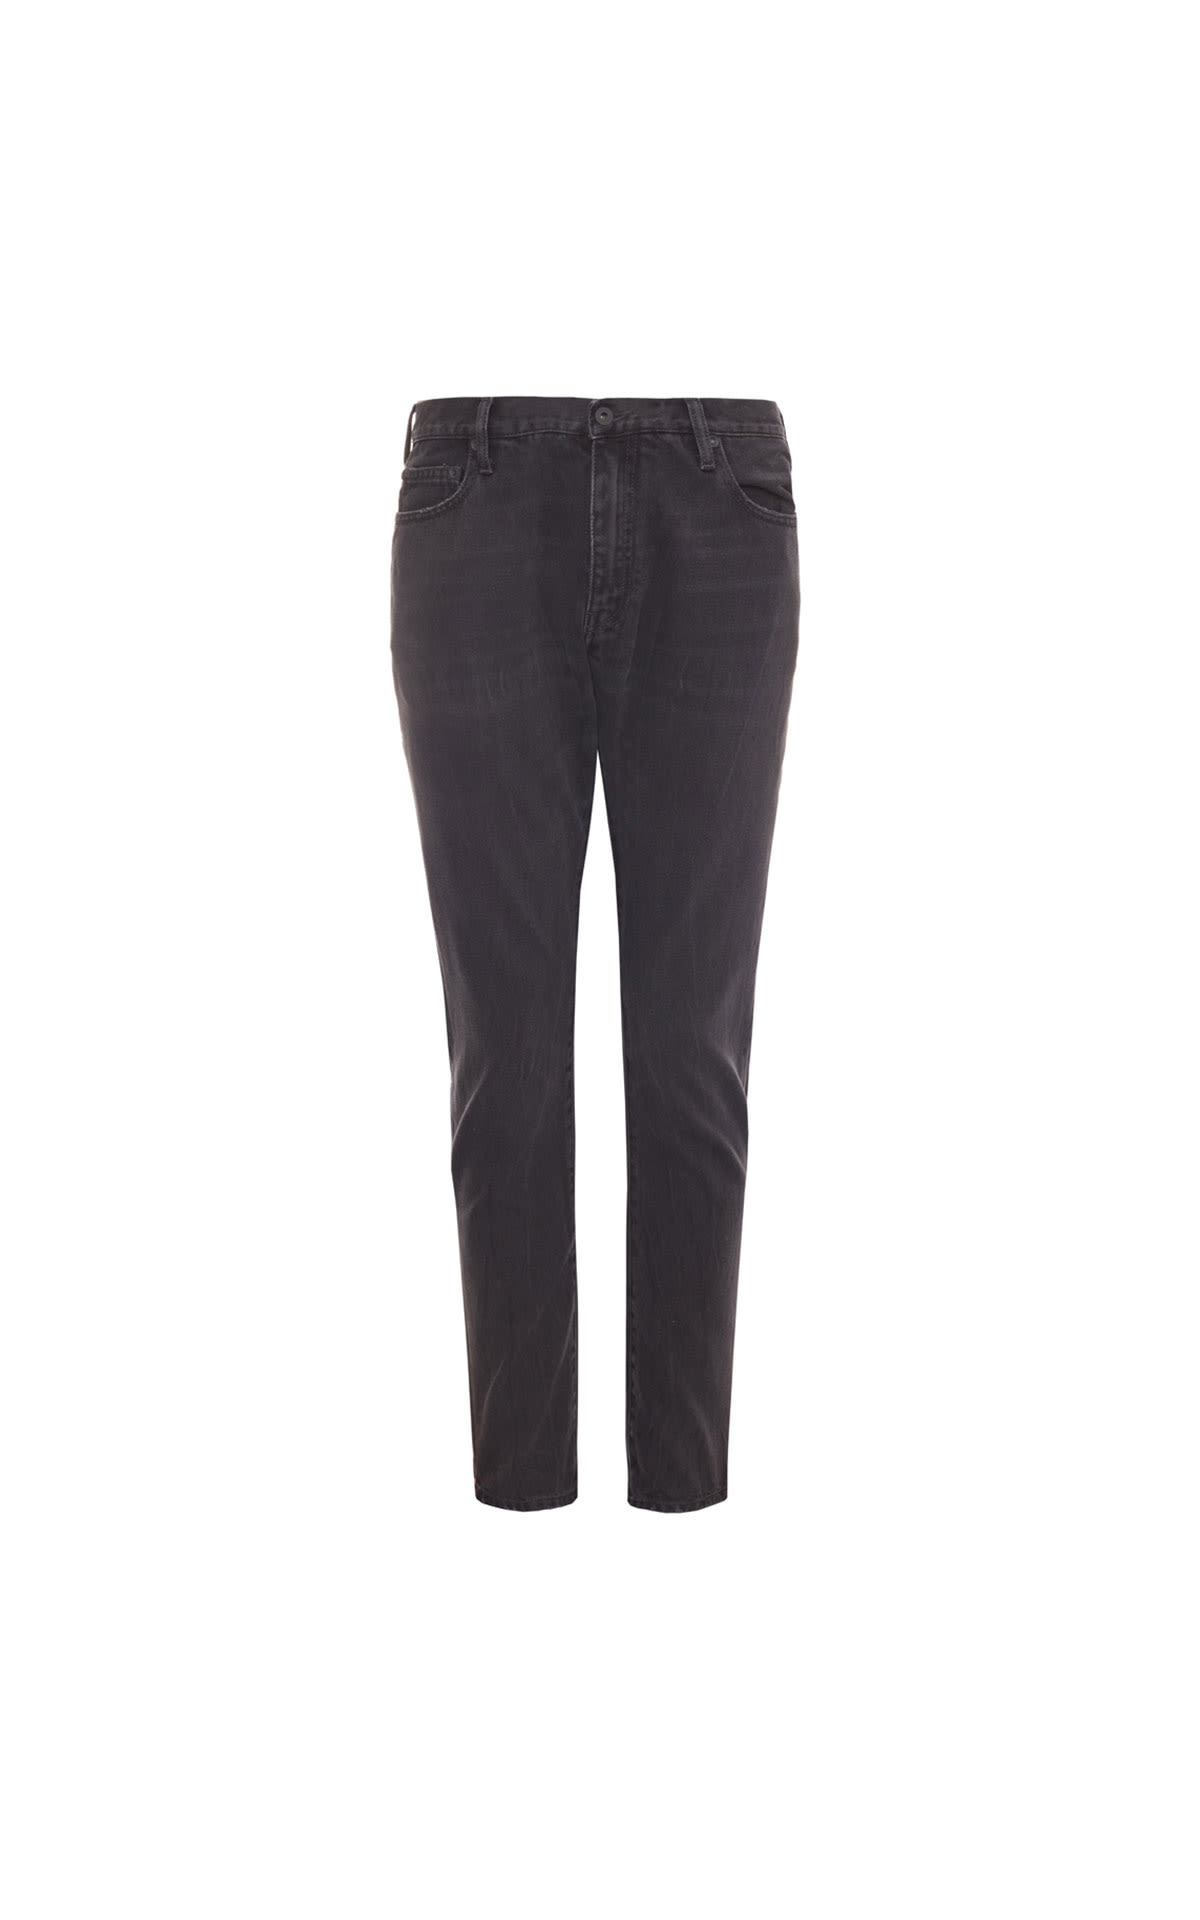 OFF-WHITE Diag pkt slim jeans grey black from Bicester Village